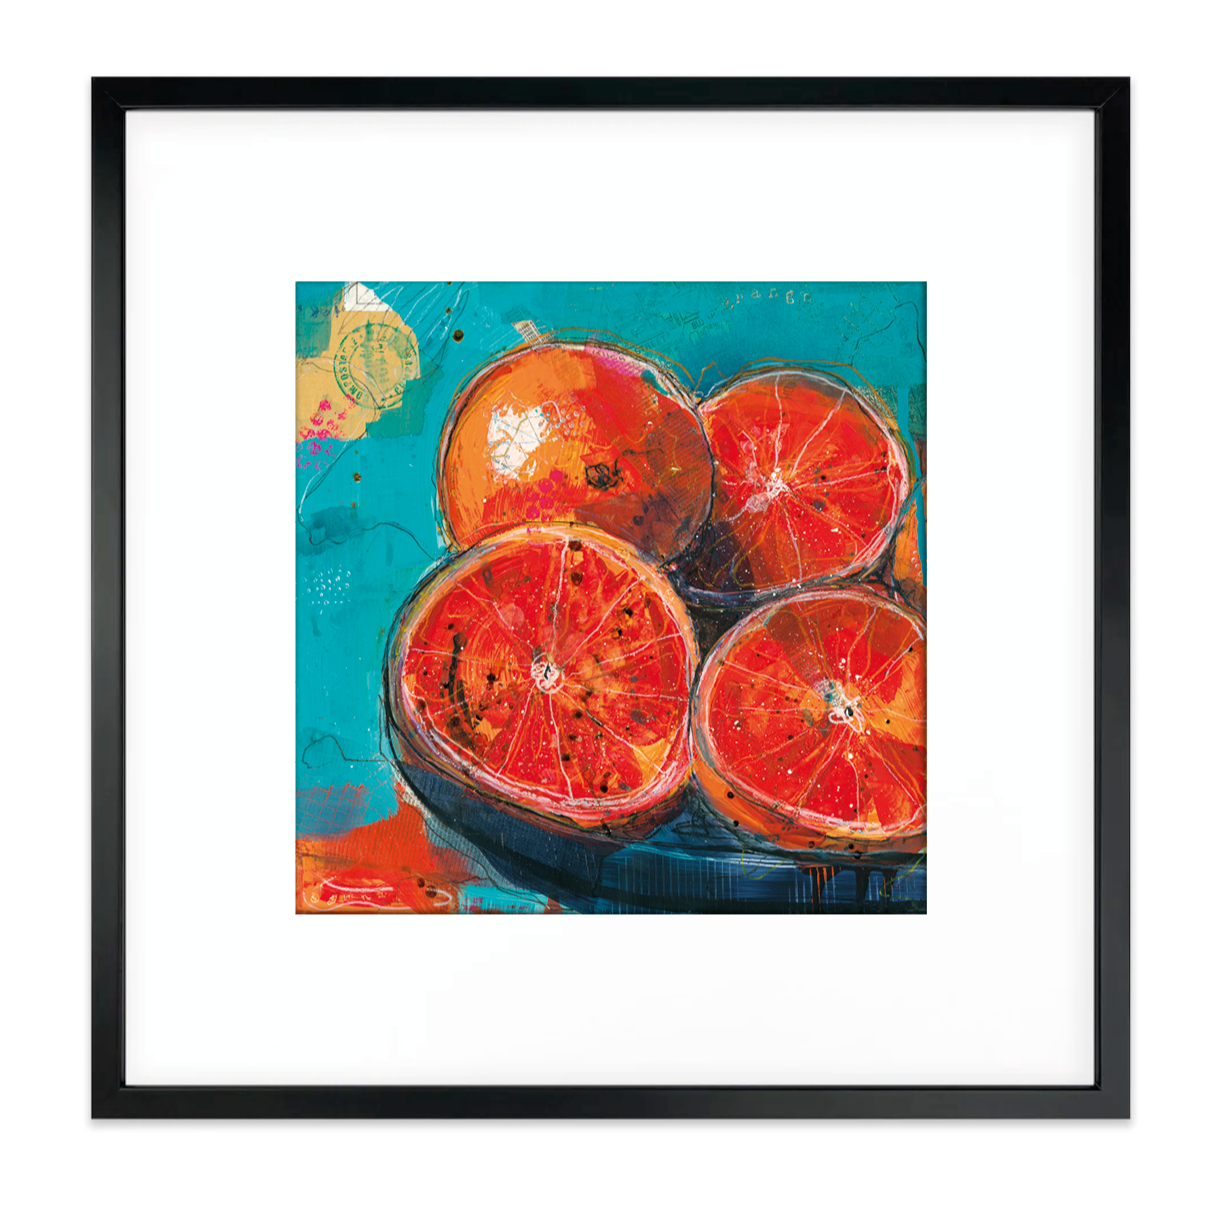 'Fruta - Blood Oranges' Contemporary Art Framed Print by Artist Emma Sherry